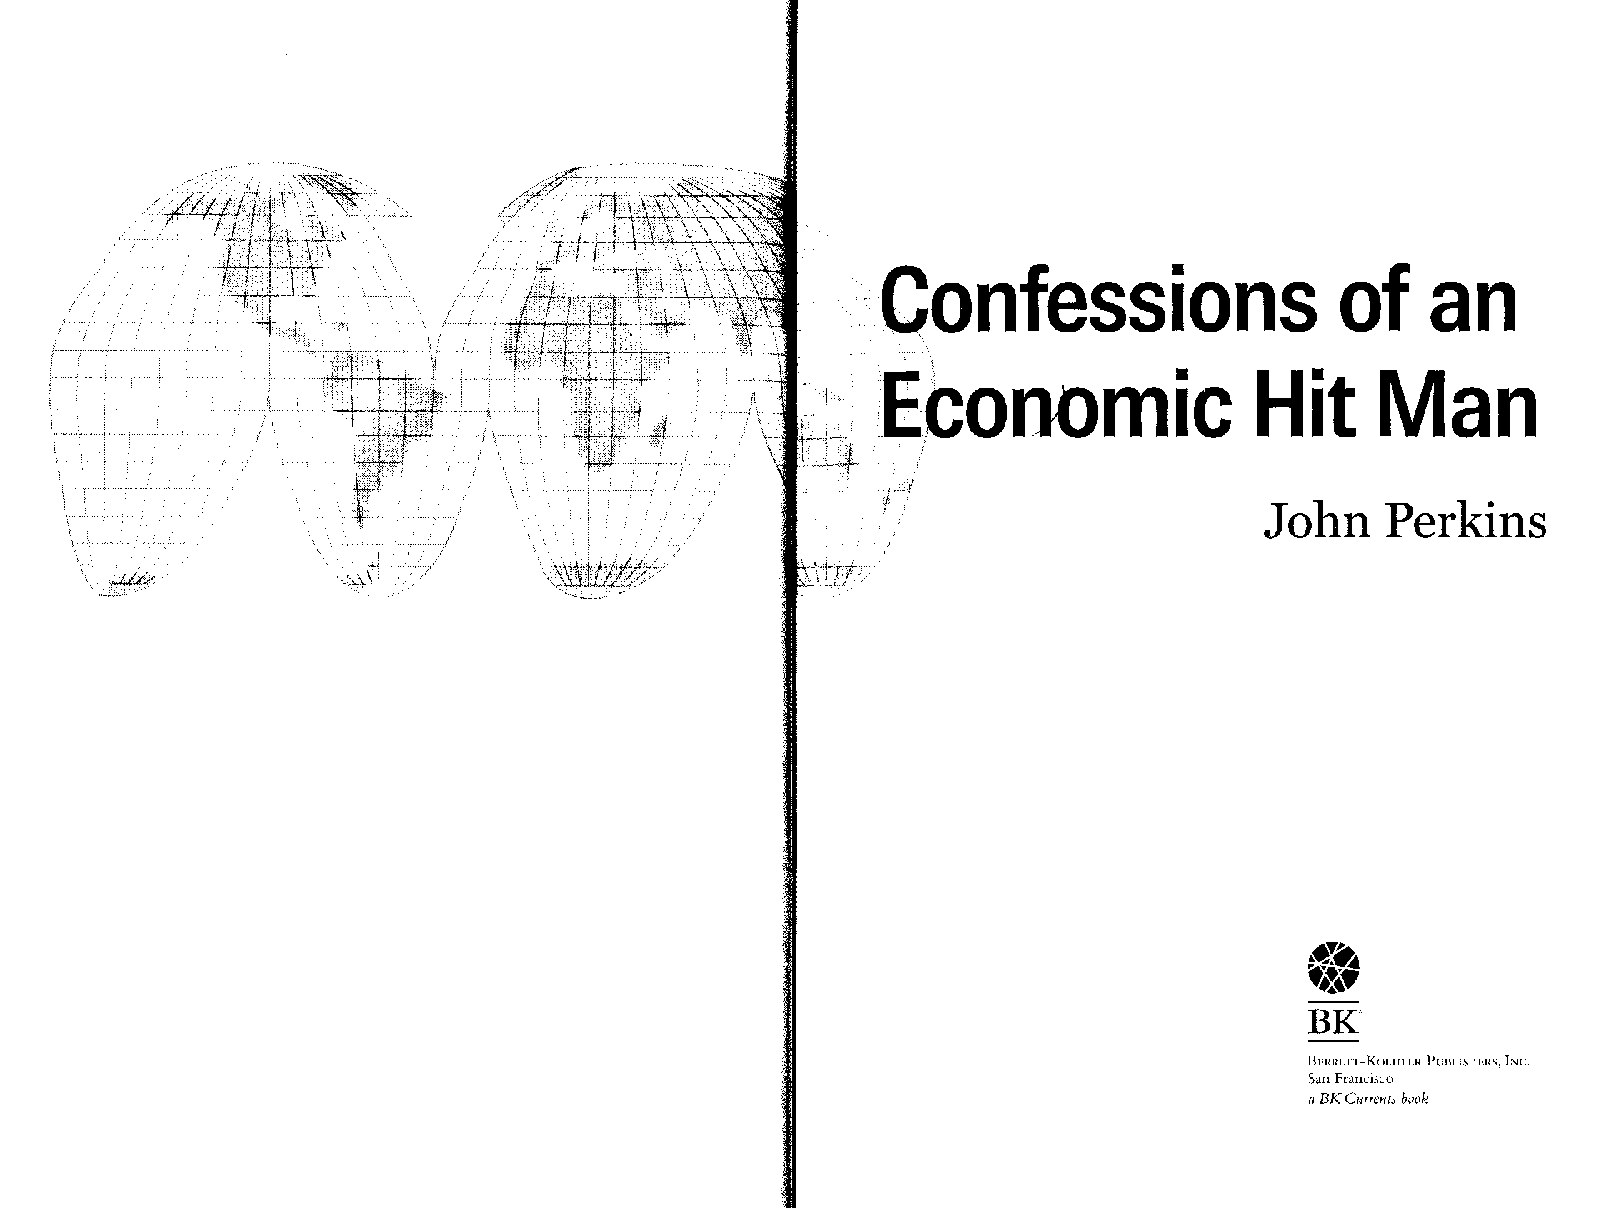 Perkins, John; Confessions of an Economic Hitman